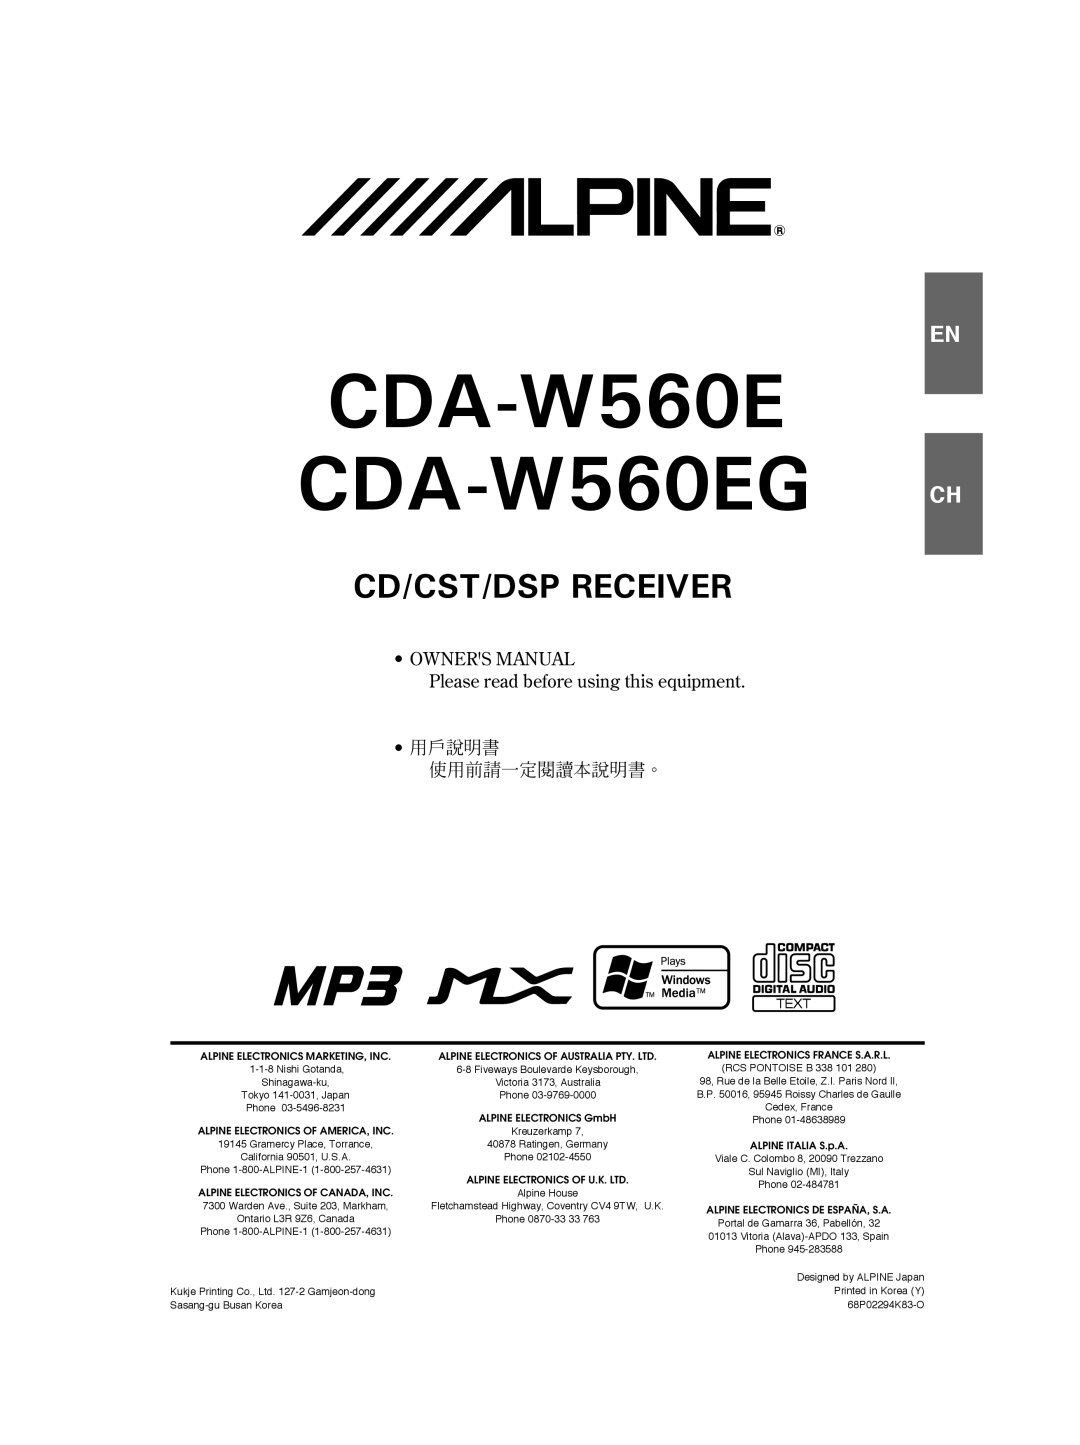 Alpine owner manual CDA-W560E CDA-W560EG, Cd/Cst/Dsp Receiver, En Ch Es Es It, Please read before using this equipment 